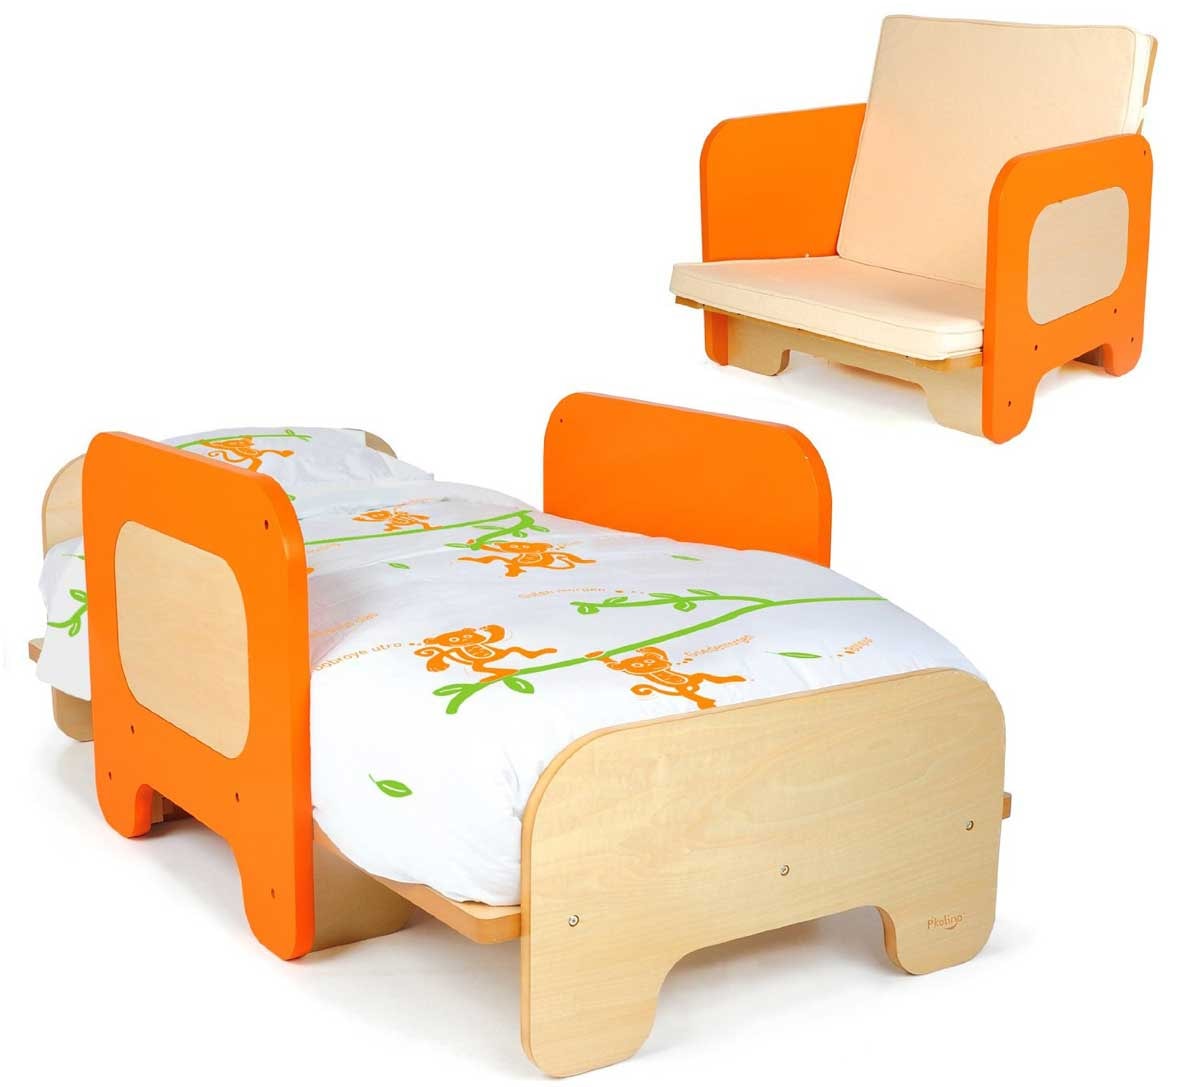 Sofa cum bed design for toddlers